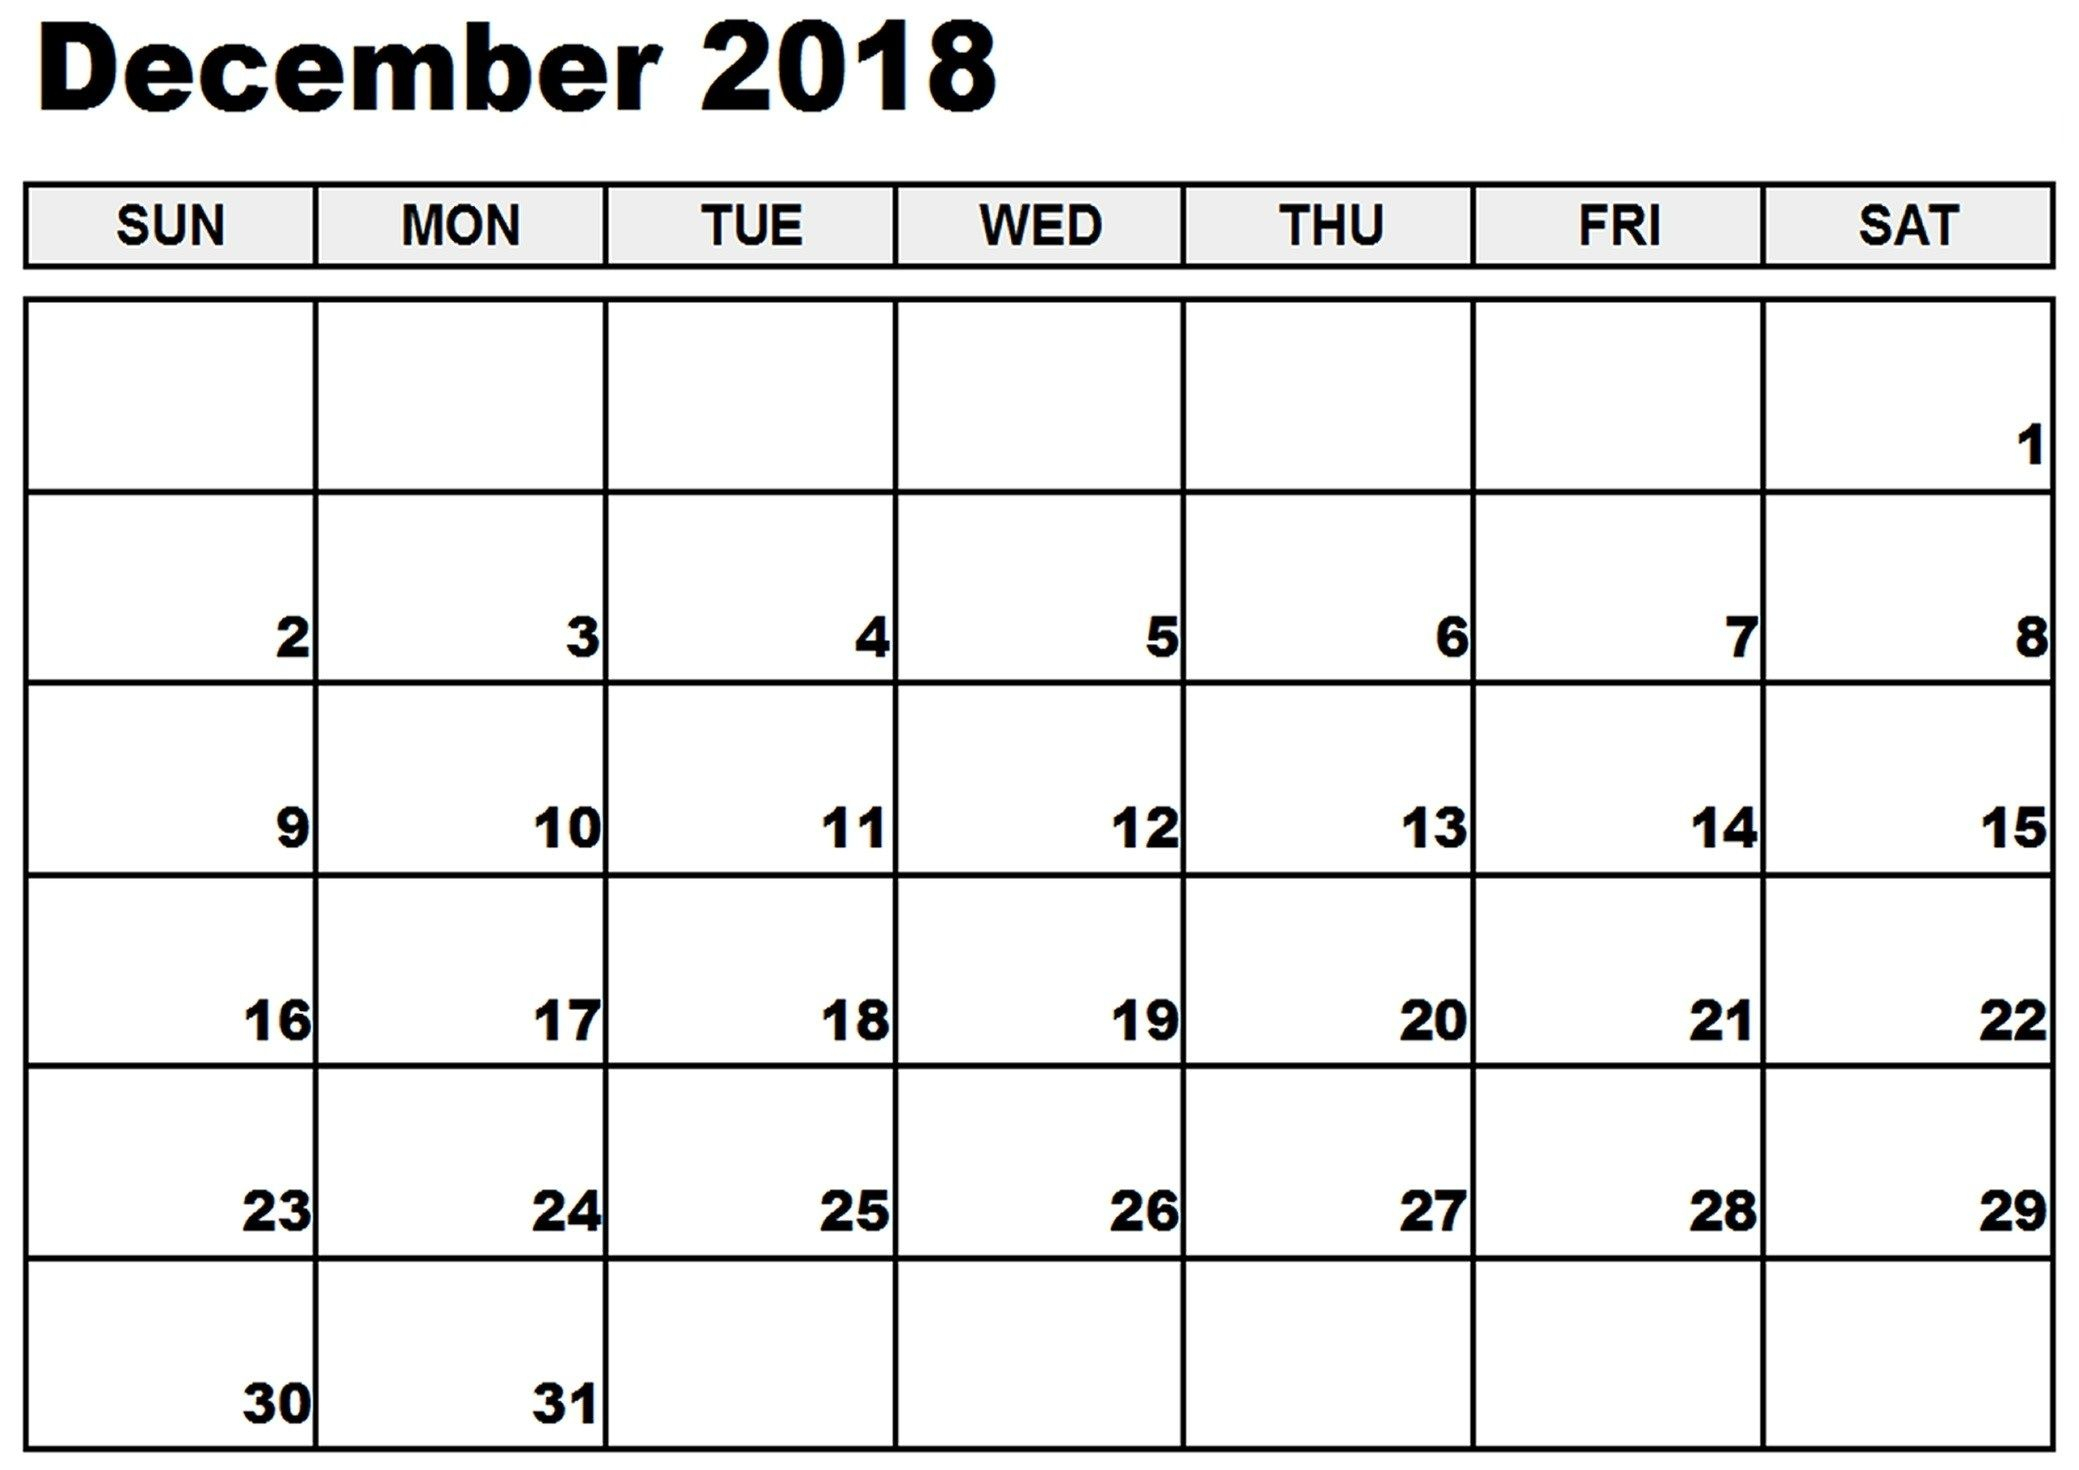 December 2018 Printable Calendar Notes To Do List Reminders